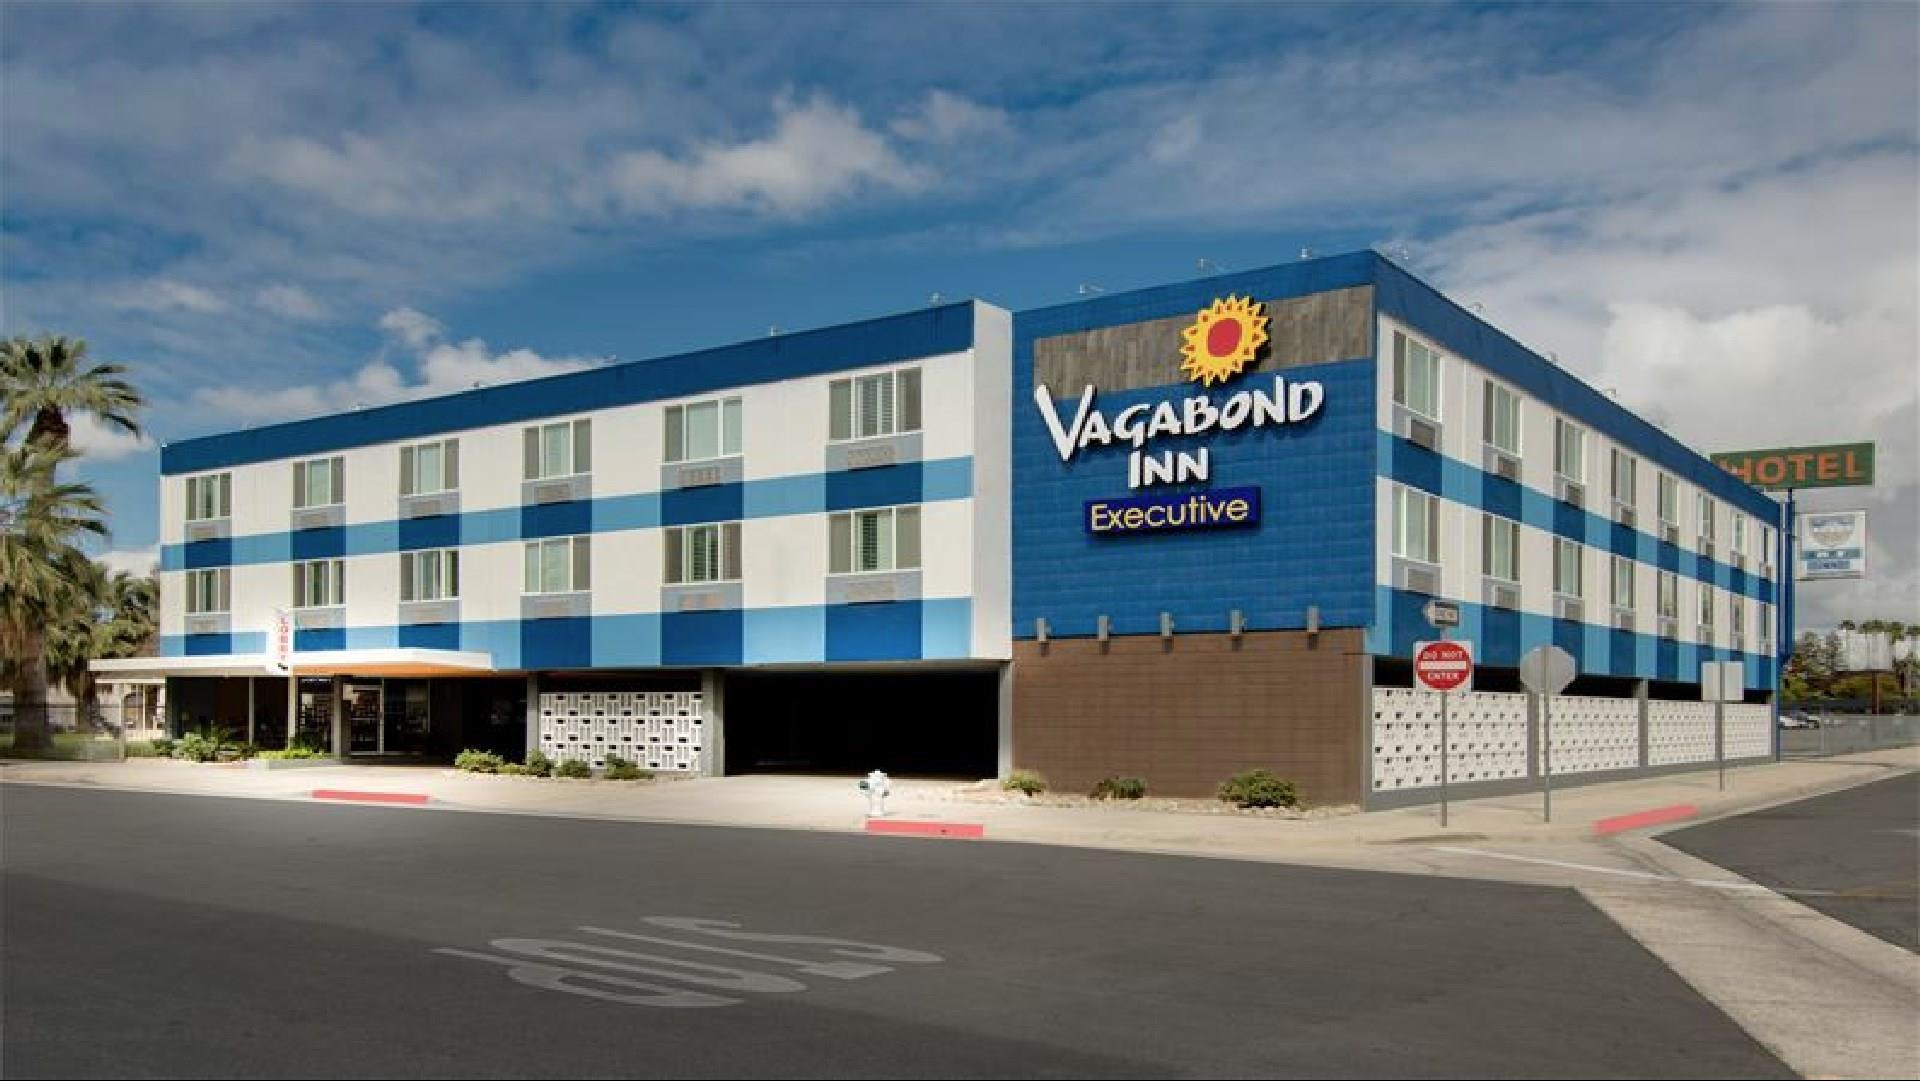 Vagabond Inn Executive Bakersfield Downtown in Bakersfield, CA